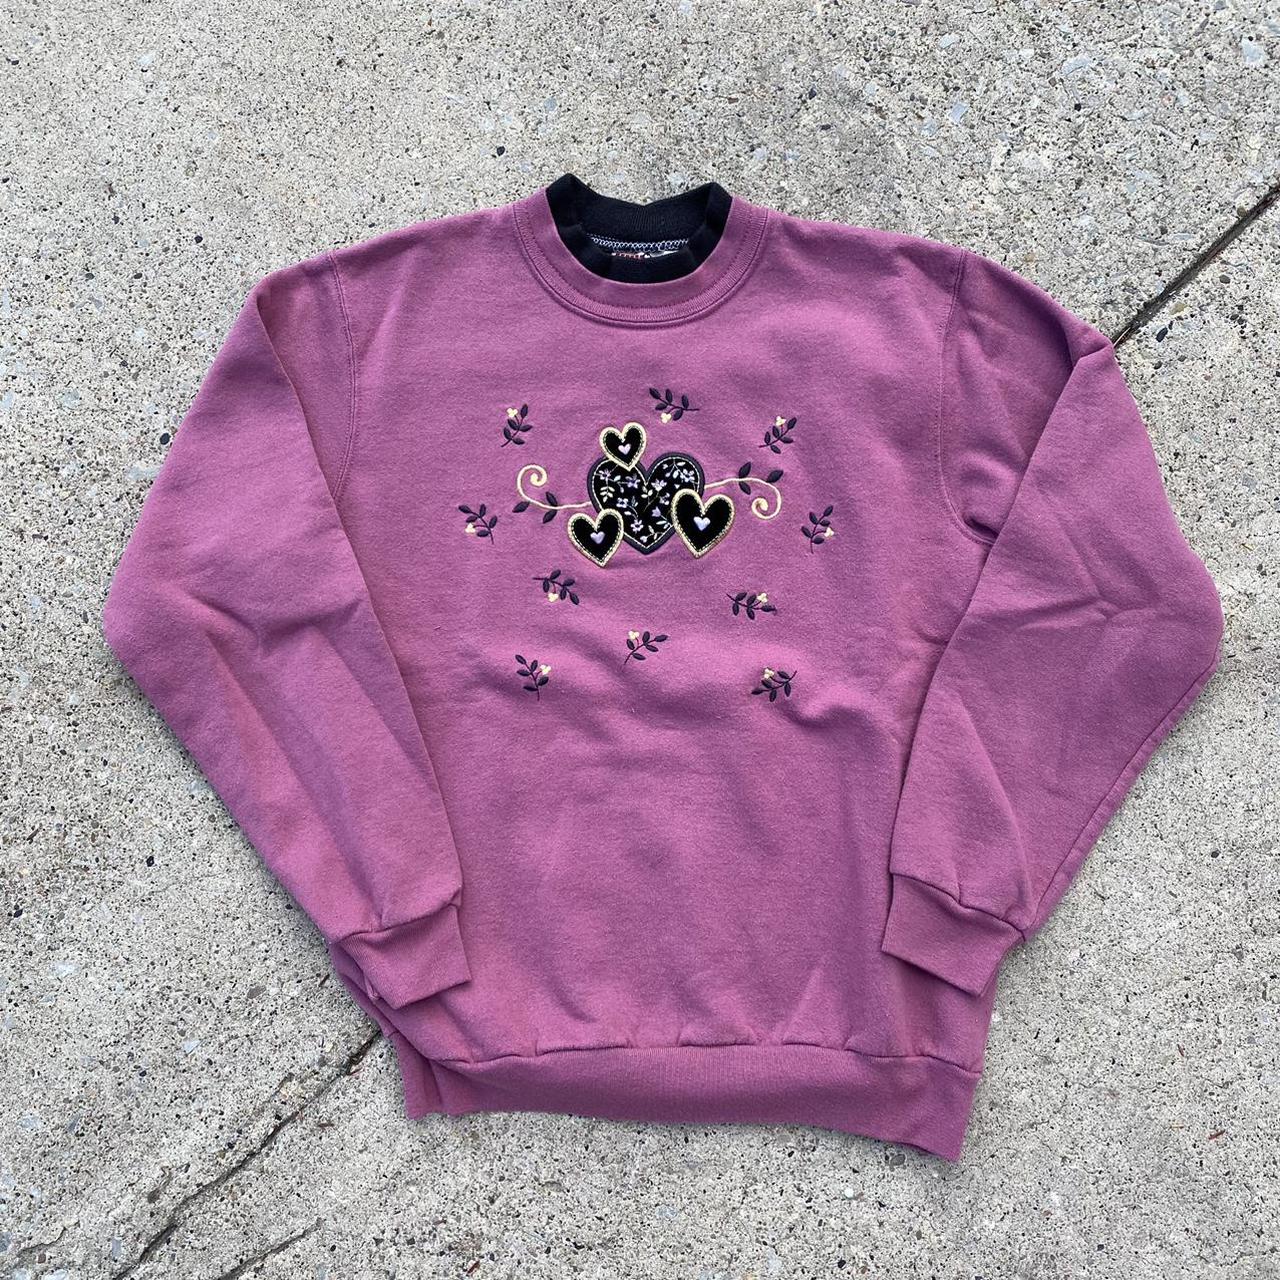 Top Stitch Men's Pink and Black Sweatshirt